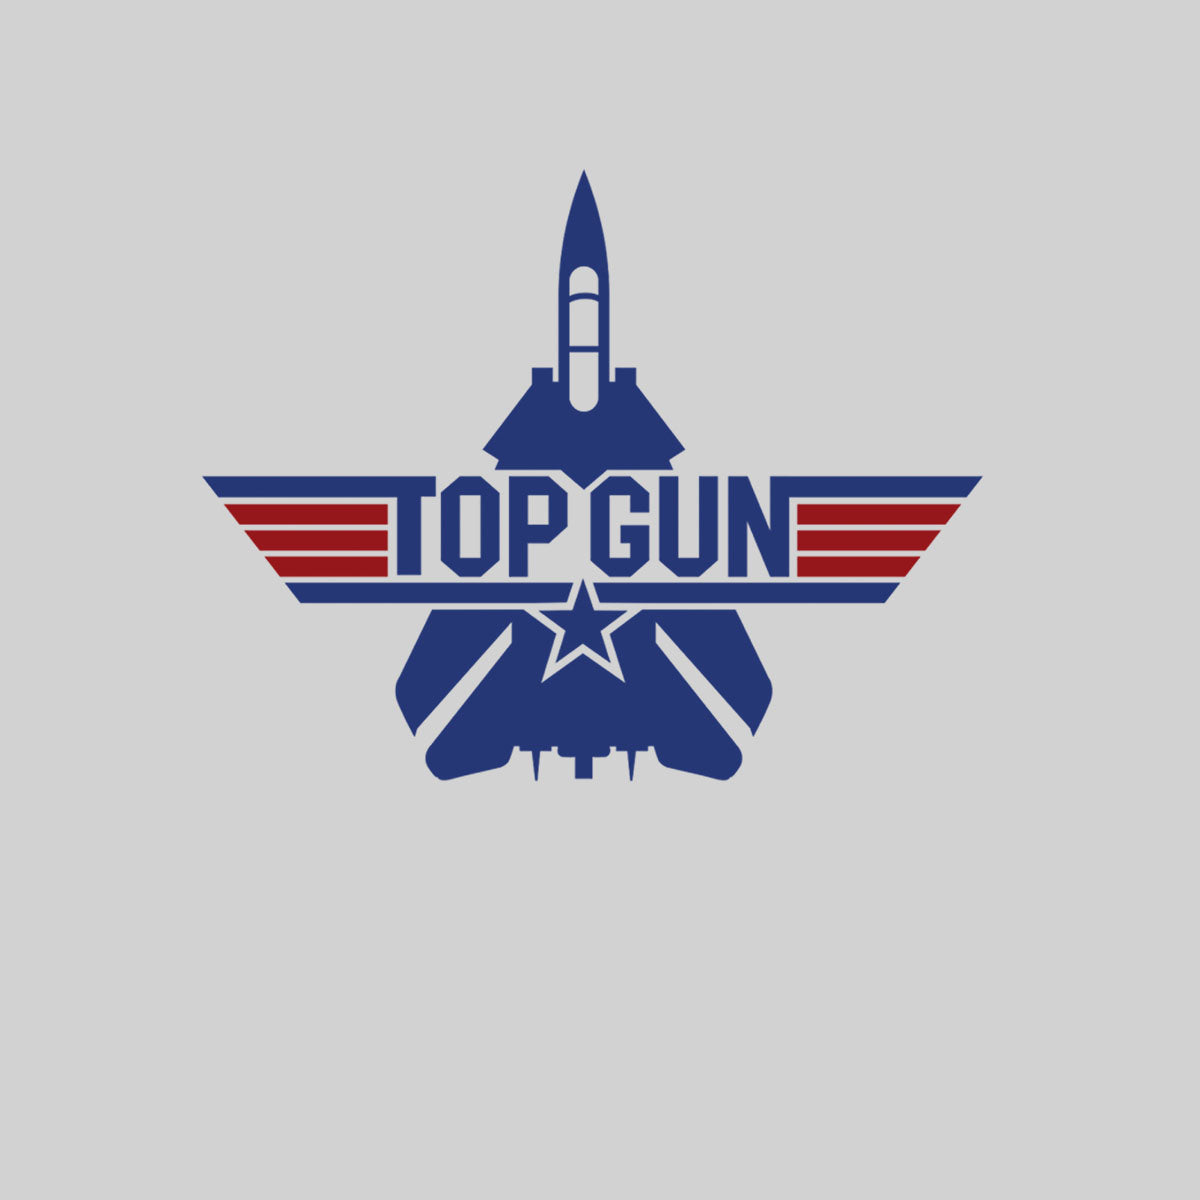 Top Gun Nostalgia T-shirt Tom Cruise Maverick T-shirt for Kids - Kuzi Tees